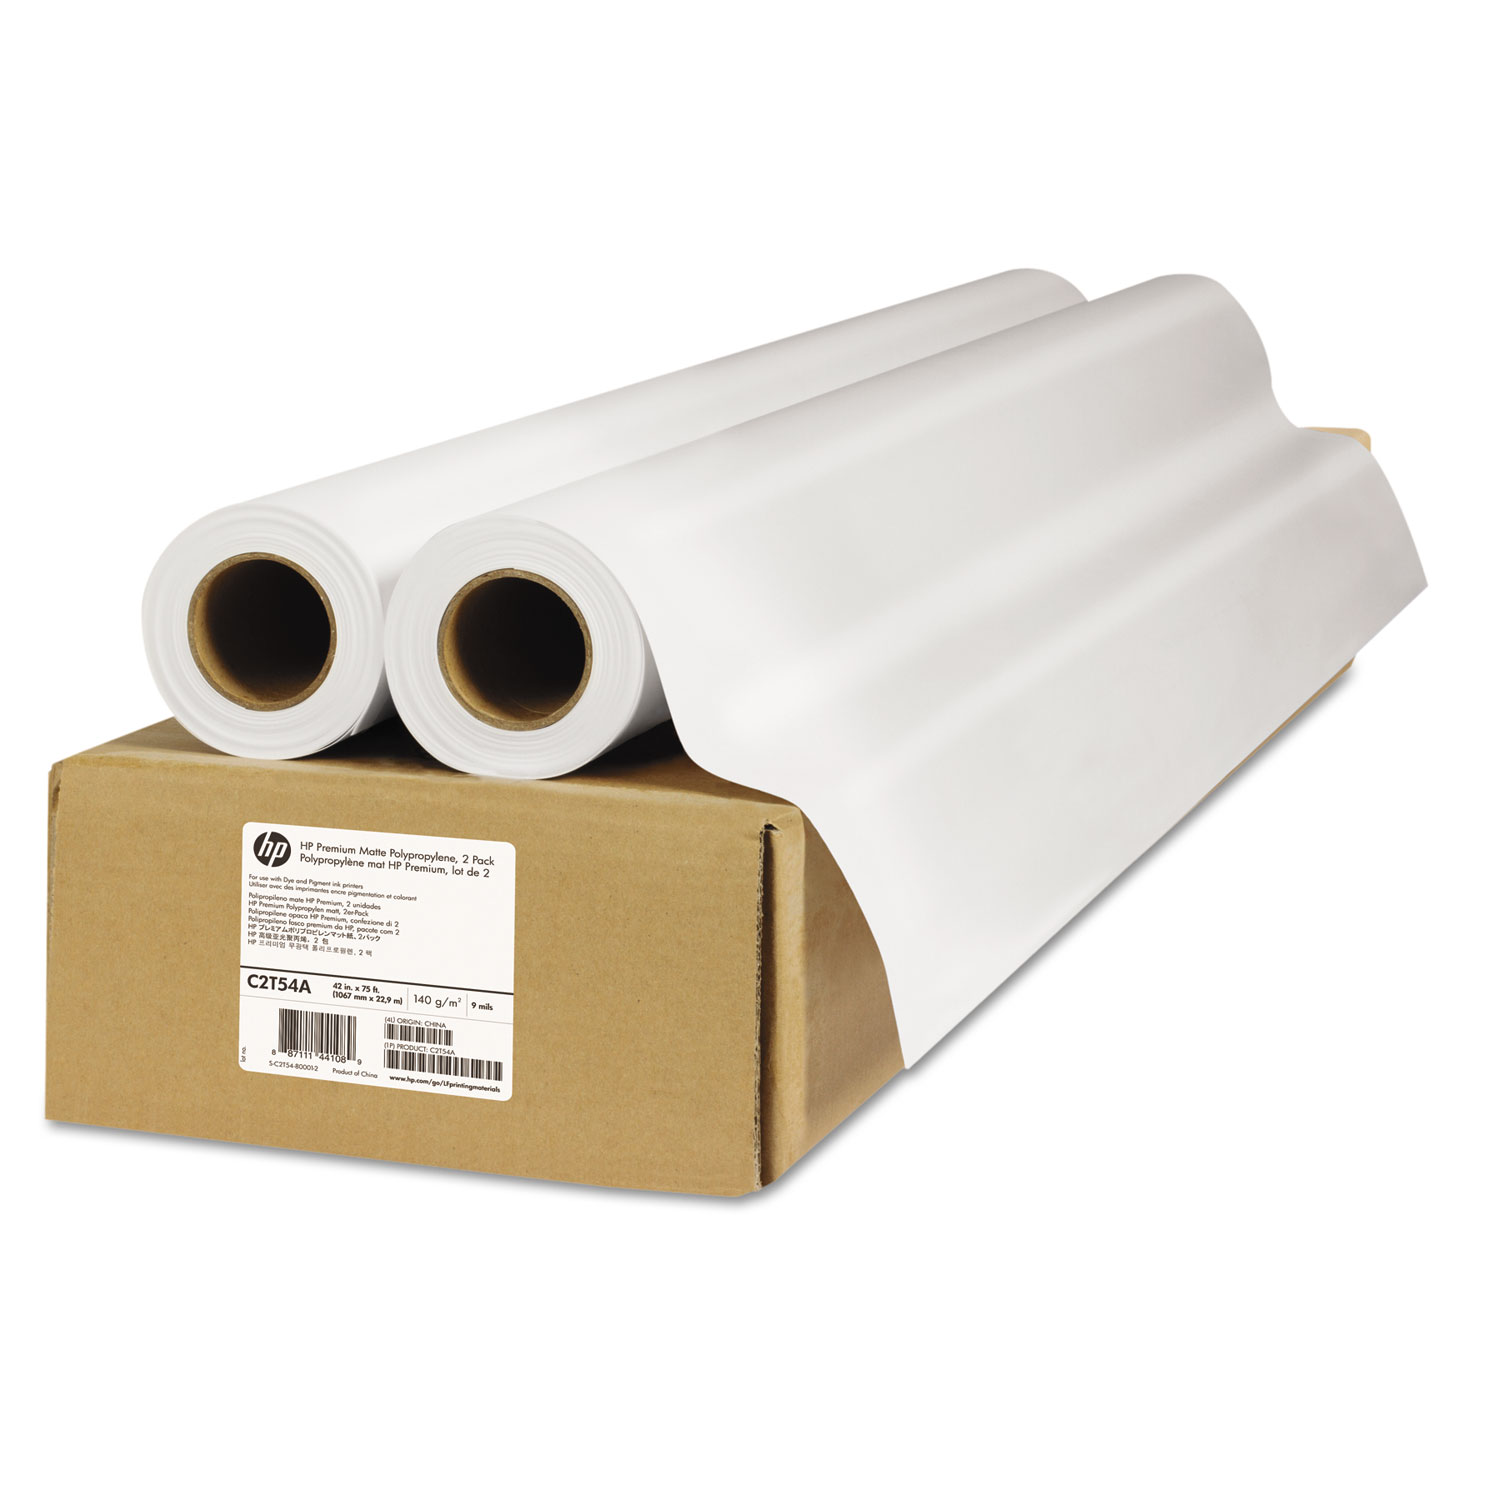 Premium Matte Polypropylene Paper, 140 g/m2, 42 x 75 ft, White, 2 Rolls/Pack